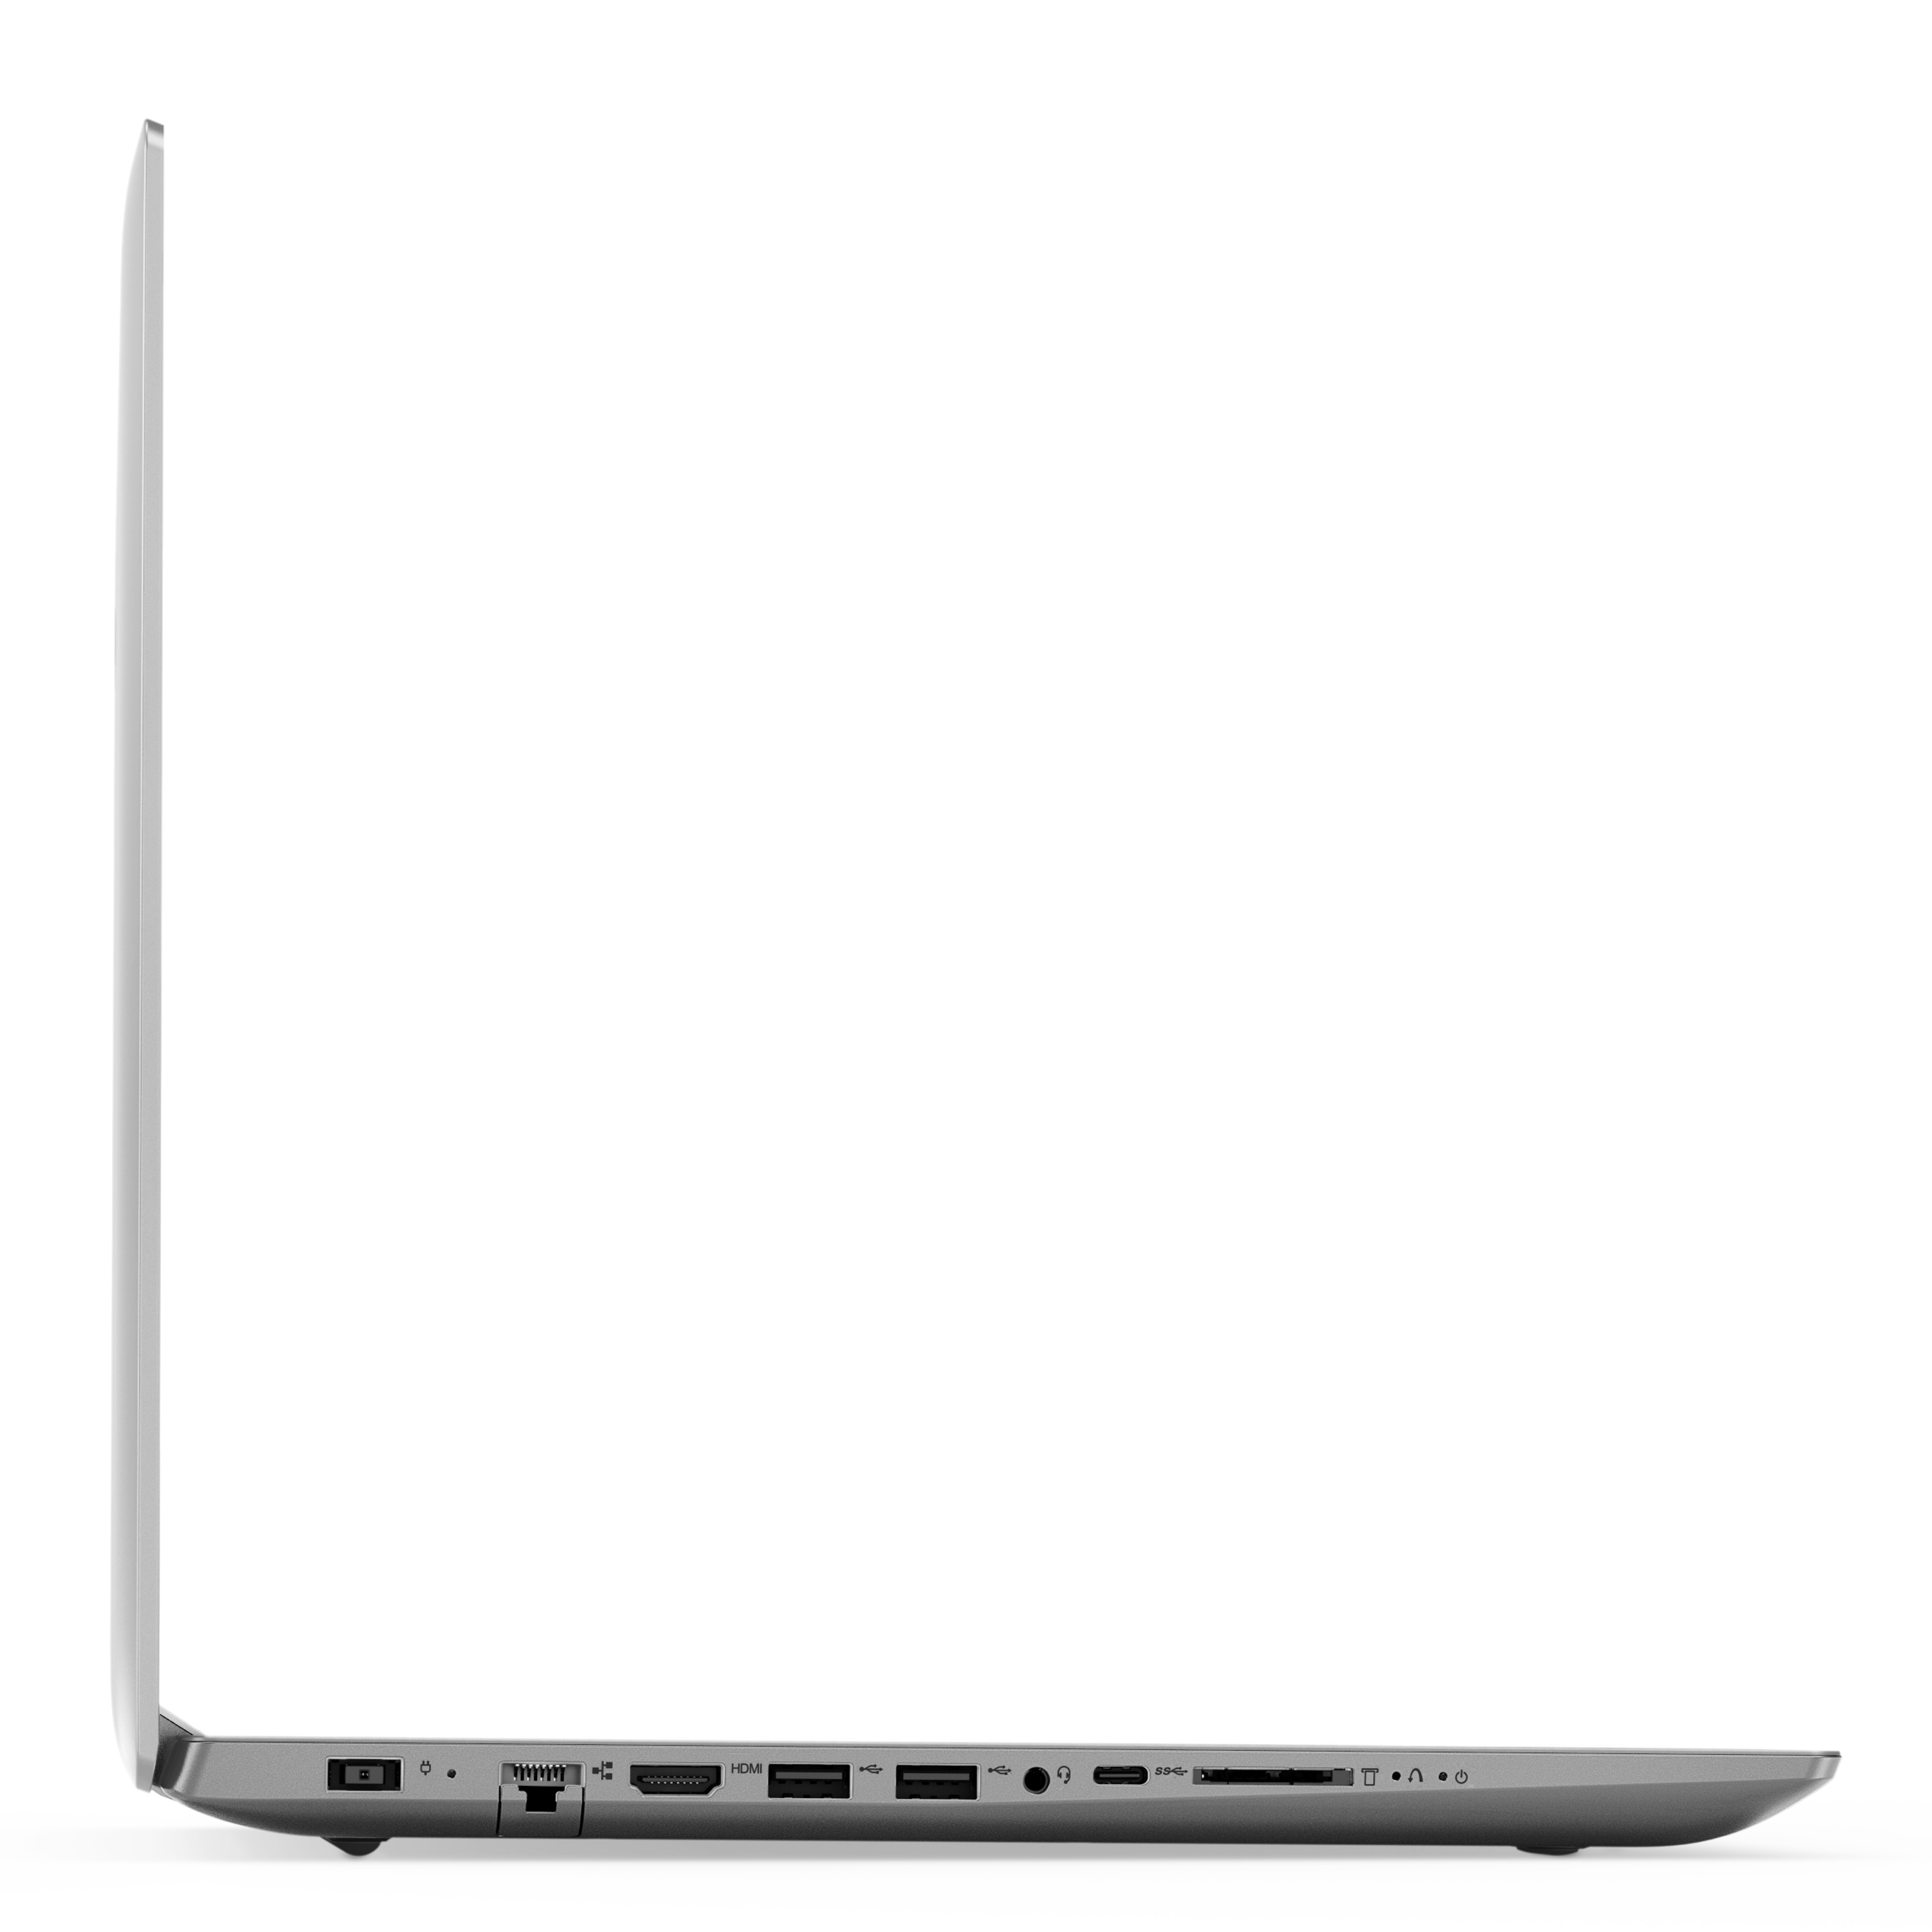 Lenovo ideapad 330 15.6" Laptop, Intel Core i3-8130U Dual-Core Processor, 4GB RAM, 1TB Hard Drive, Windows 10 - Platinum Grey - 81DE00LAUS - image 3 of 8